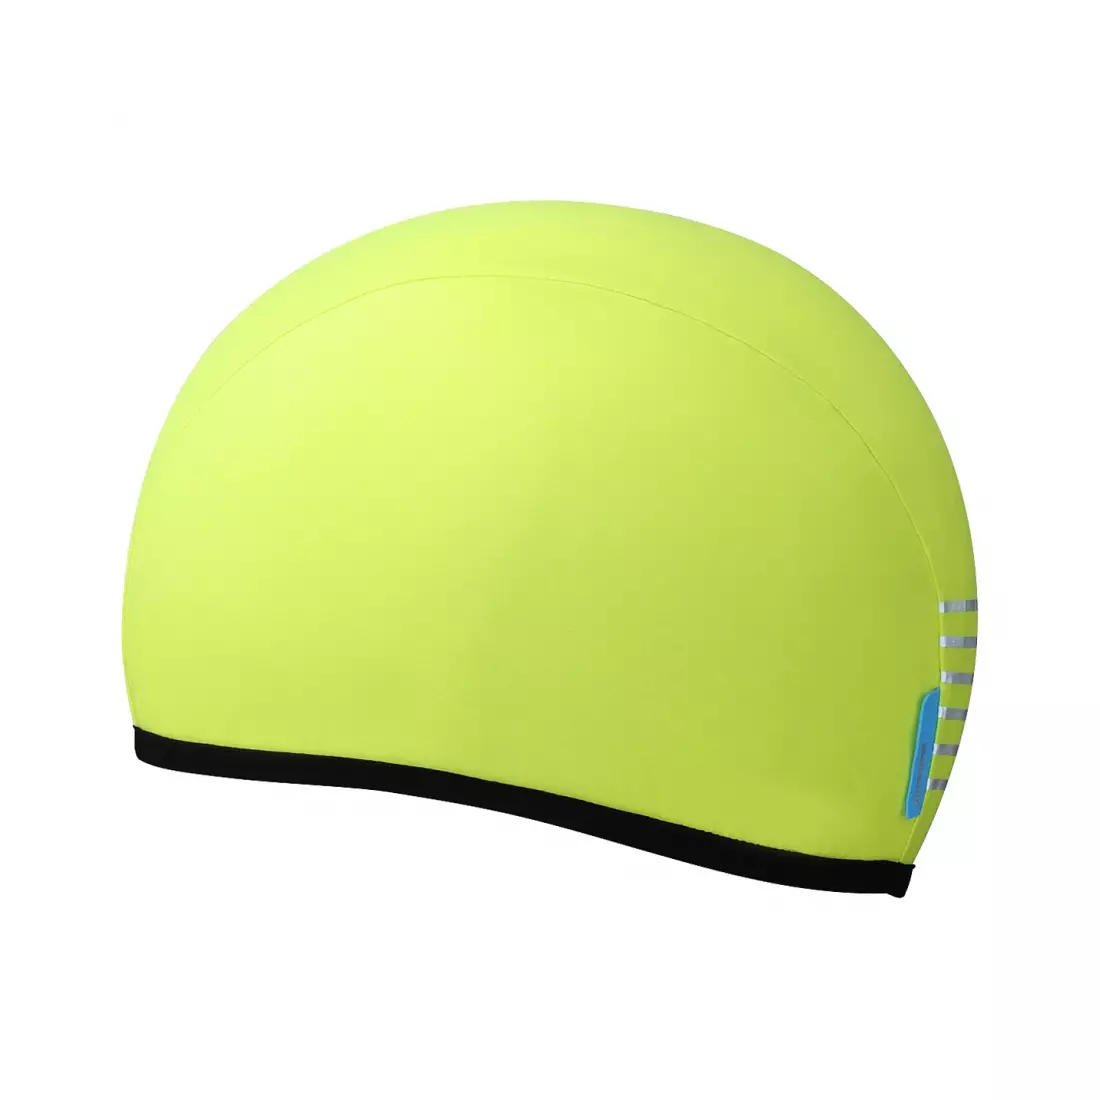 SHIMANO AW17 Waterproof Helmet Cover ECWOABWQS14UF0 Neon Yellow Universal